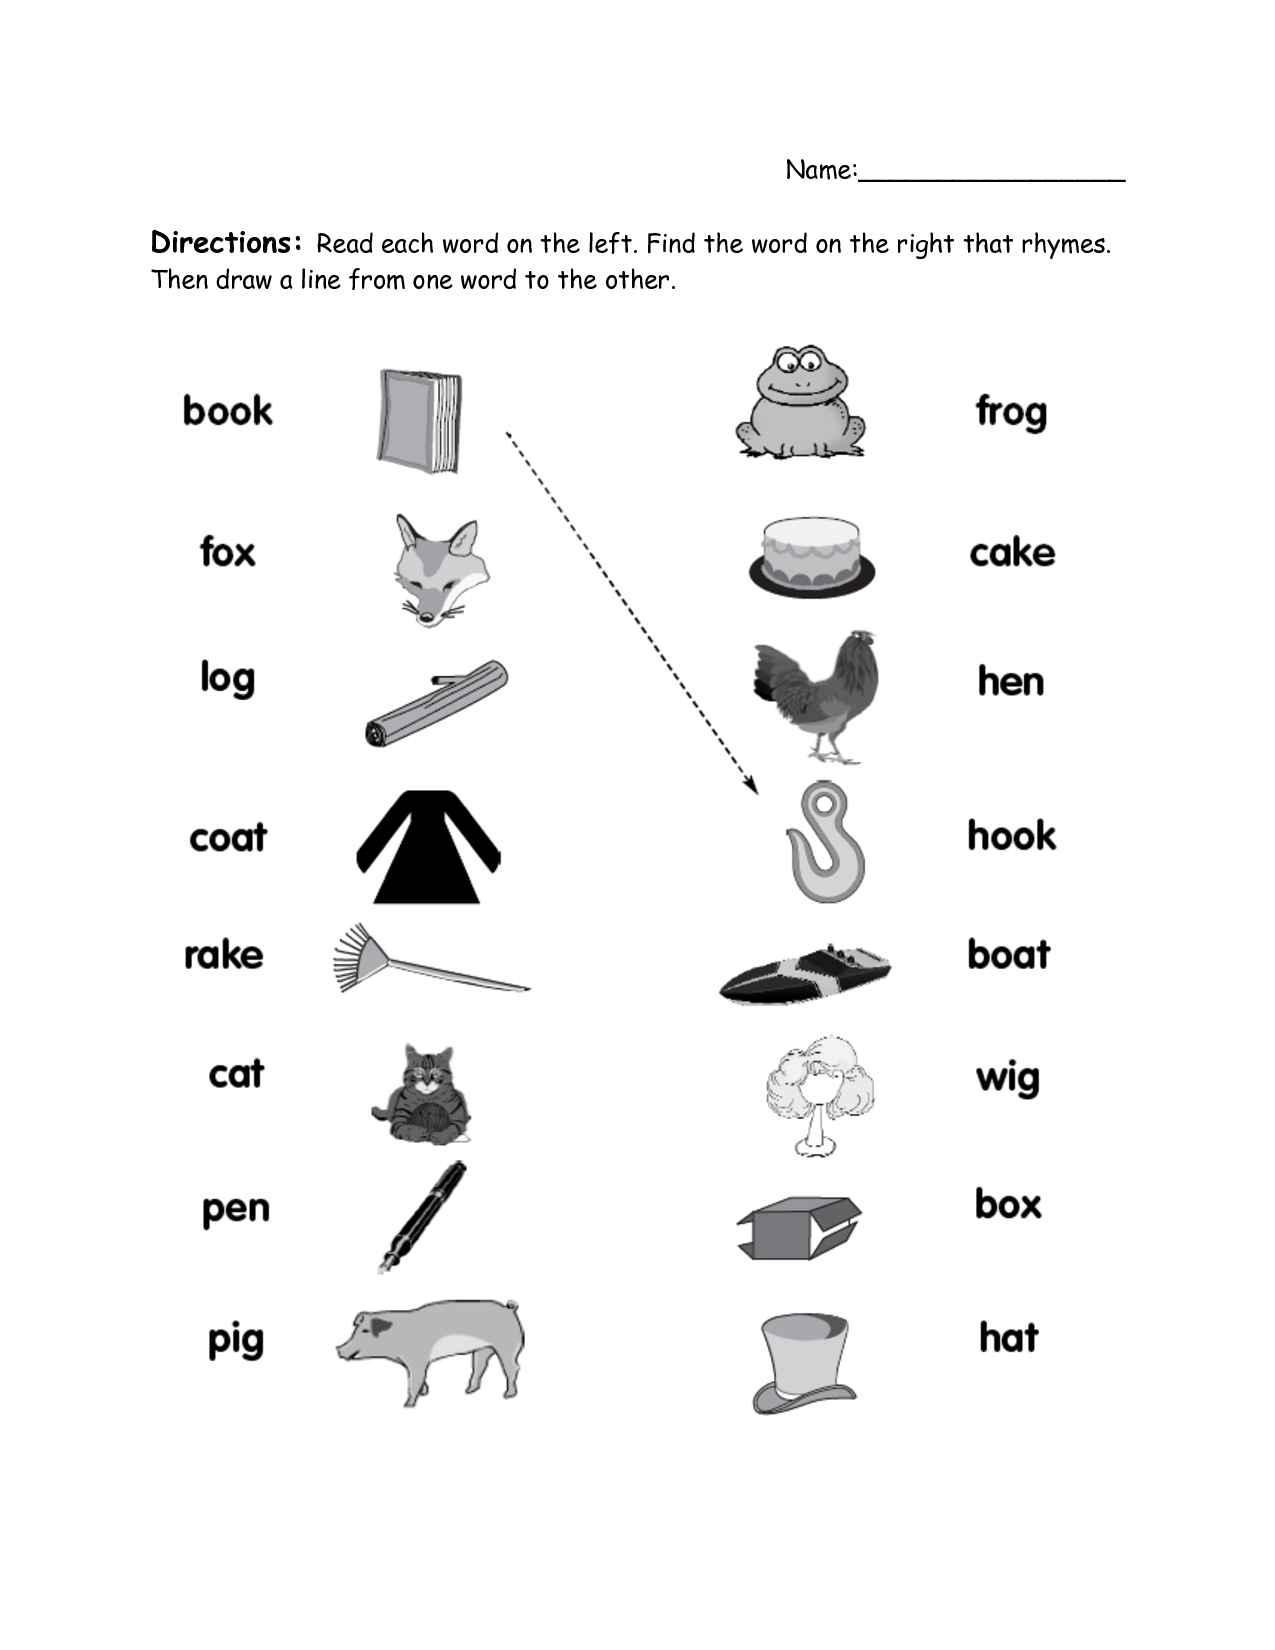 Identifying Rhyming Words Worksheet For Grade 1